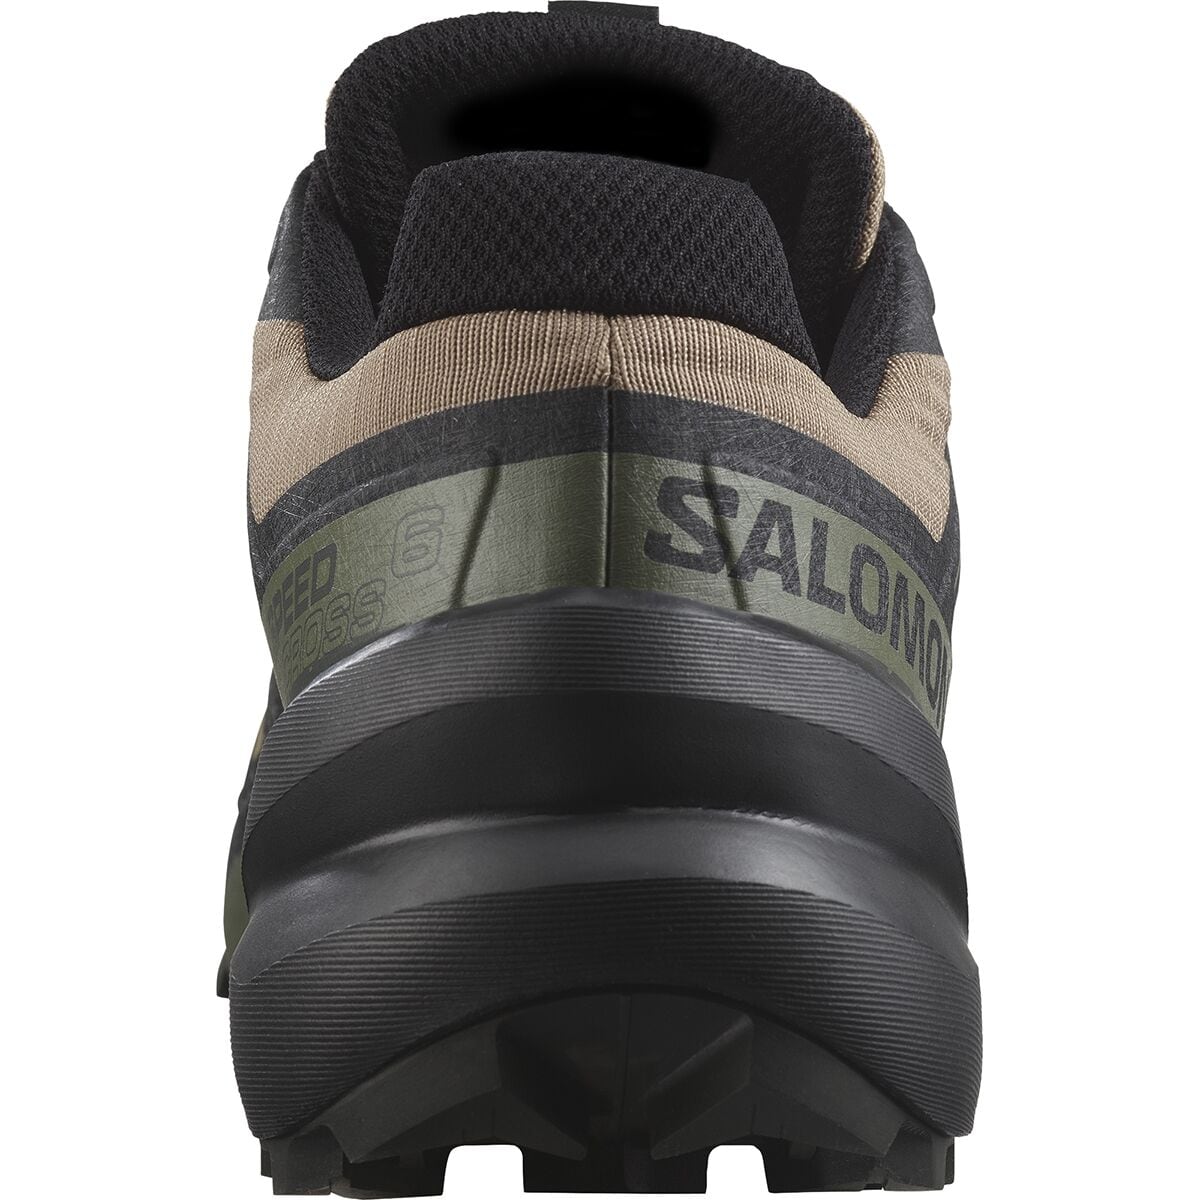 Zapatillas SALOMON SpeedCross 6 Forces negras